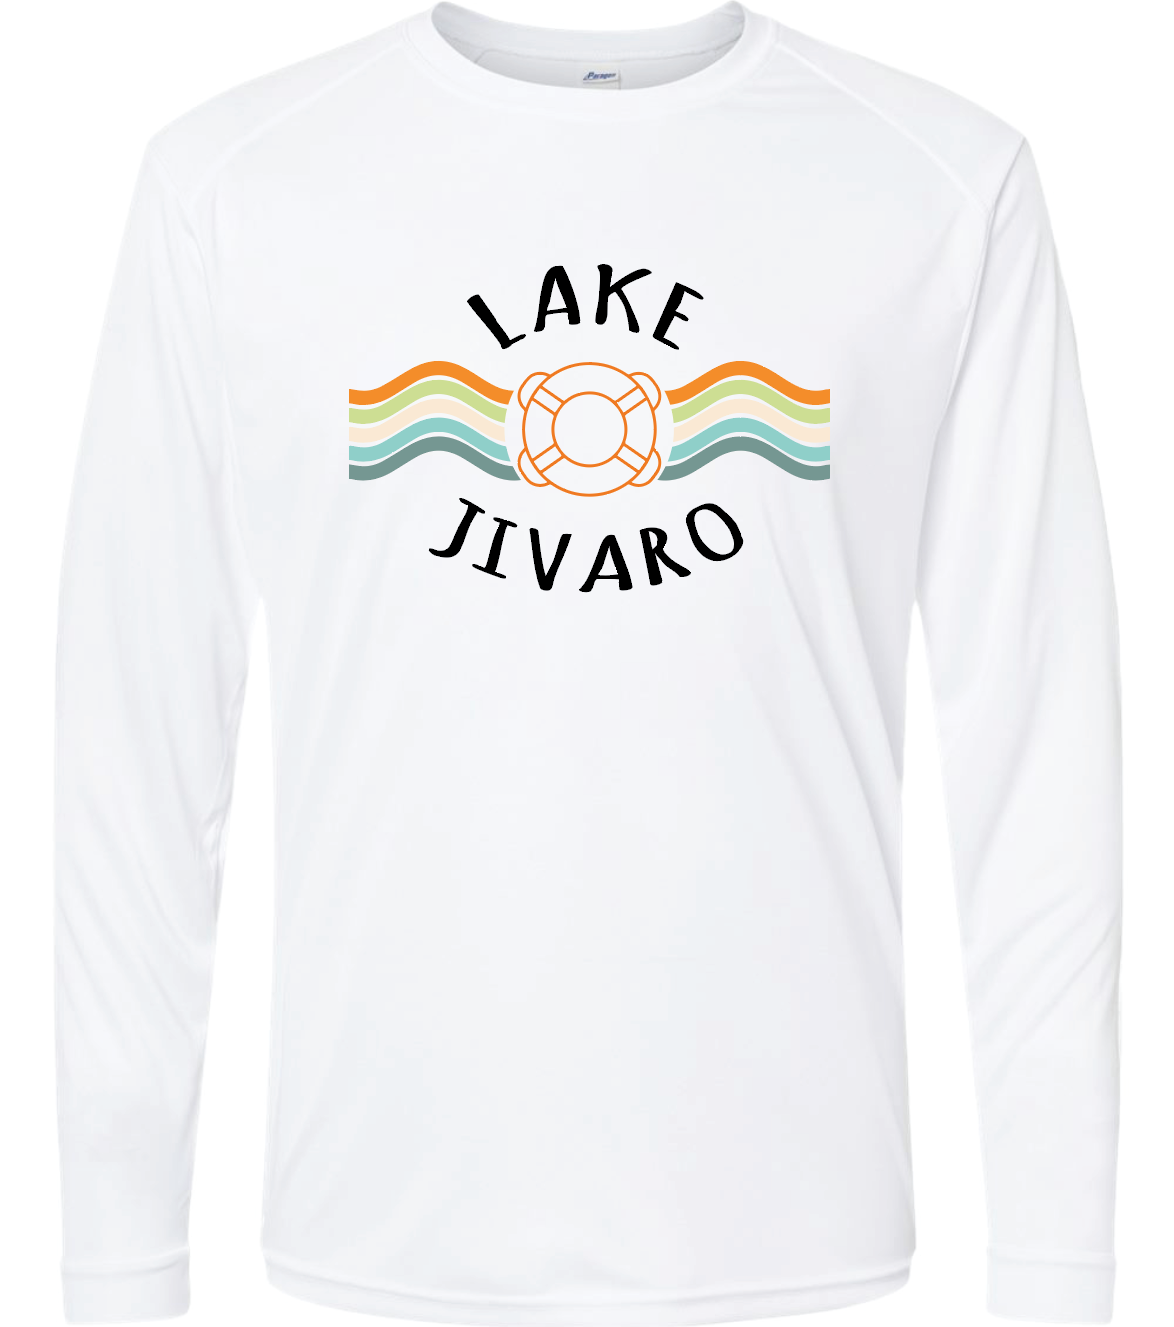 Jivaro Floaty Paragon Performance Long Sleeve T-shirt